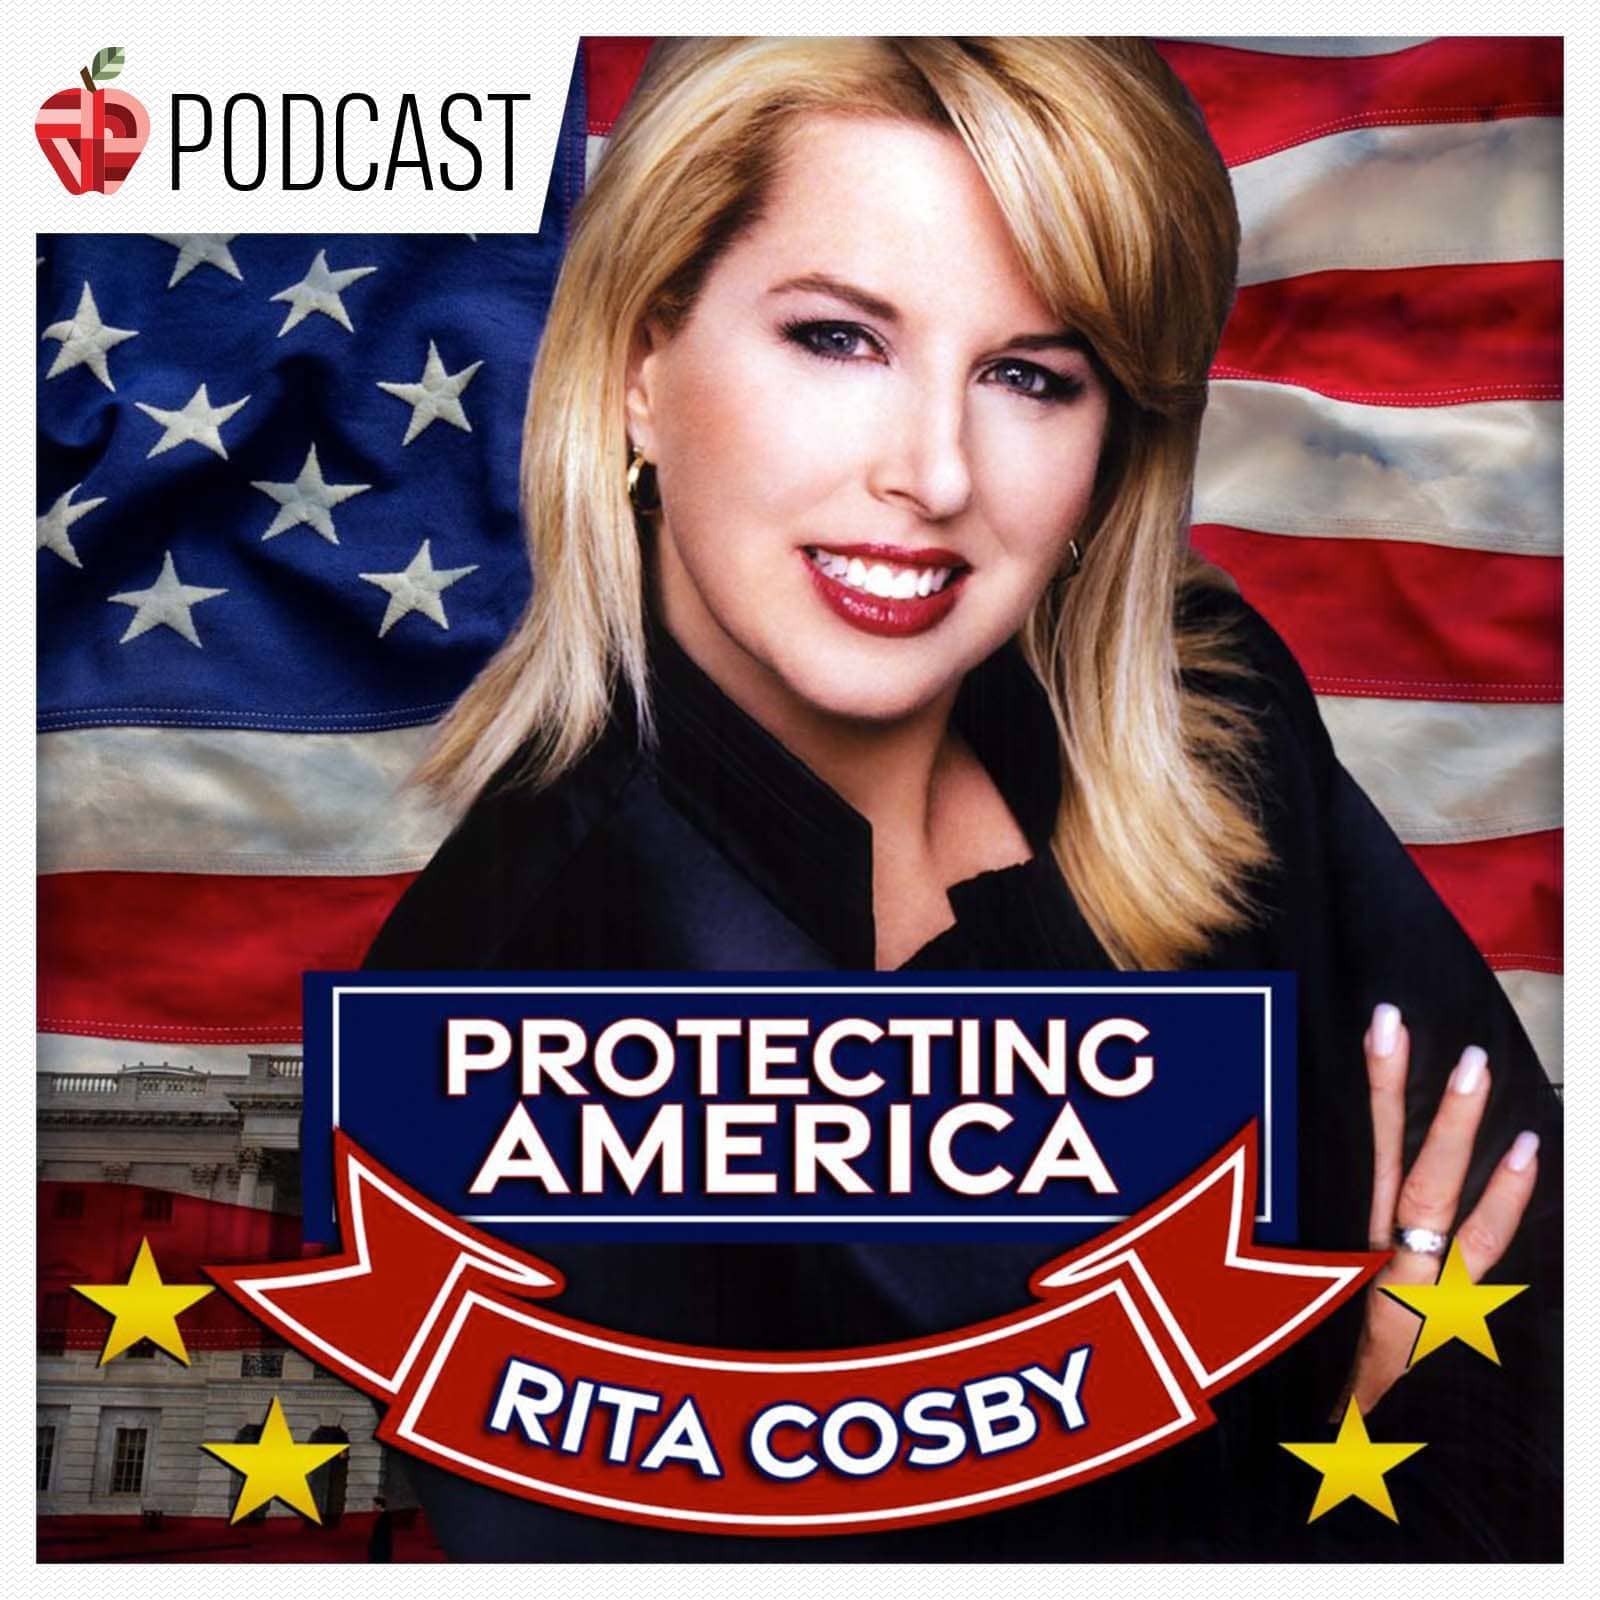 rita-cosby-protecting-america-correct-podcast-new-logo-24